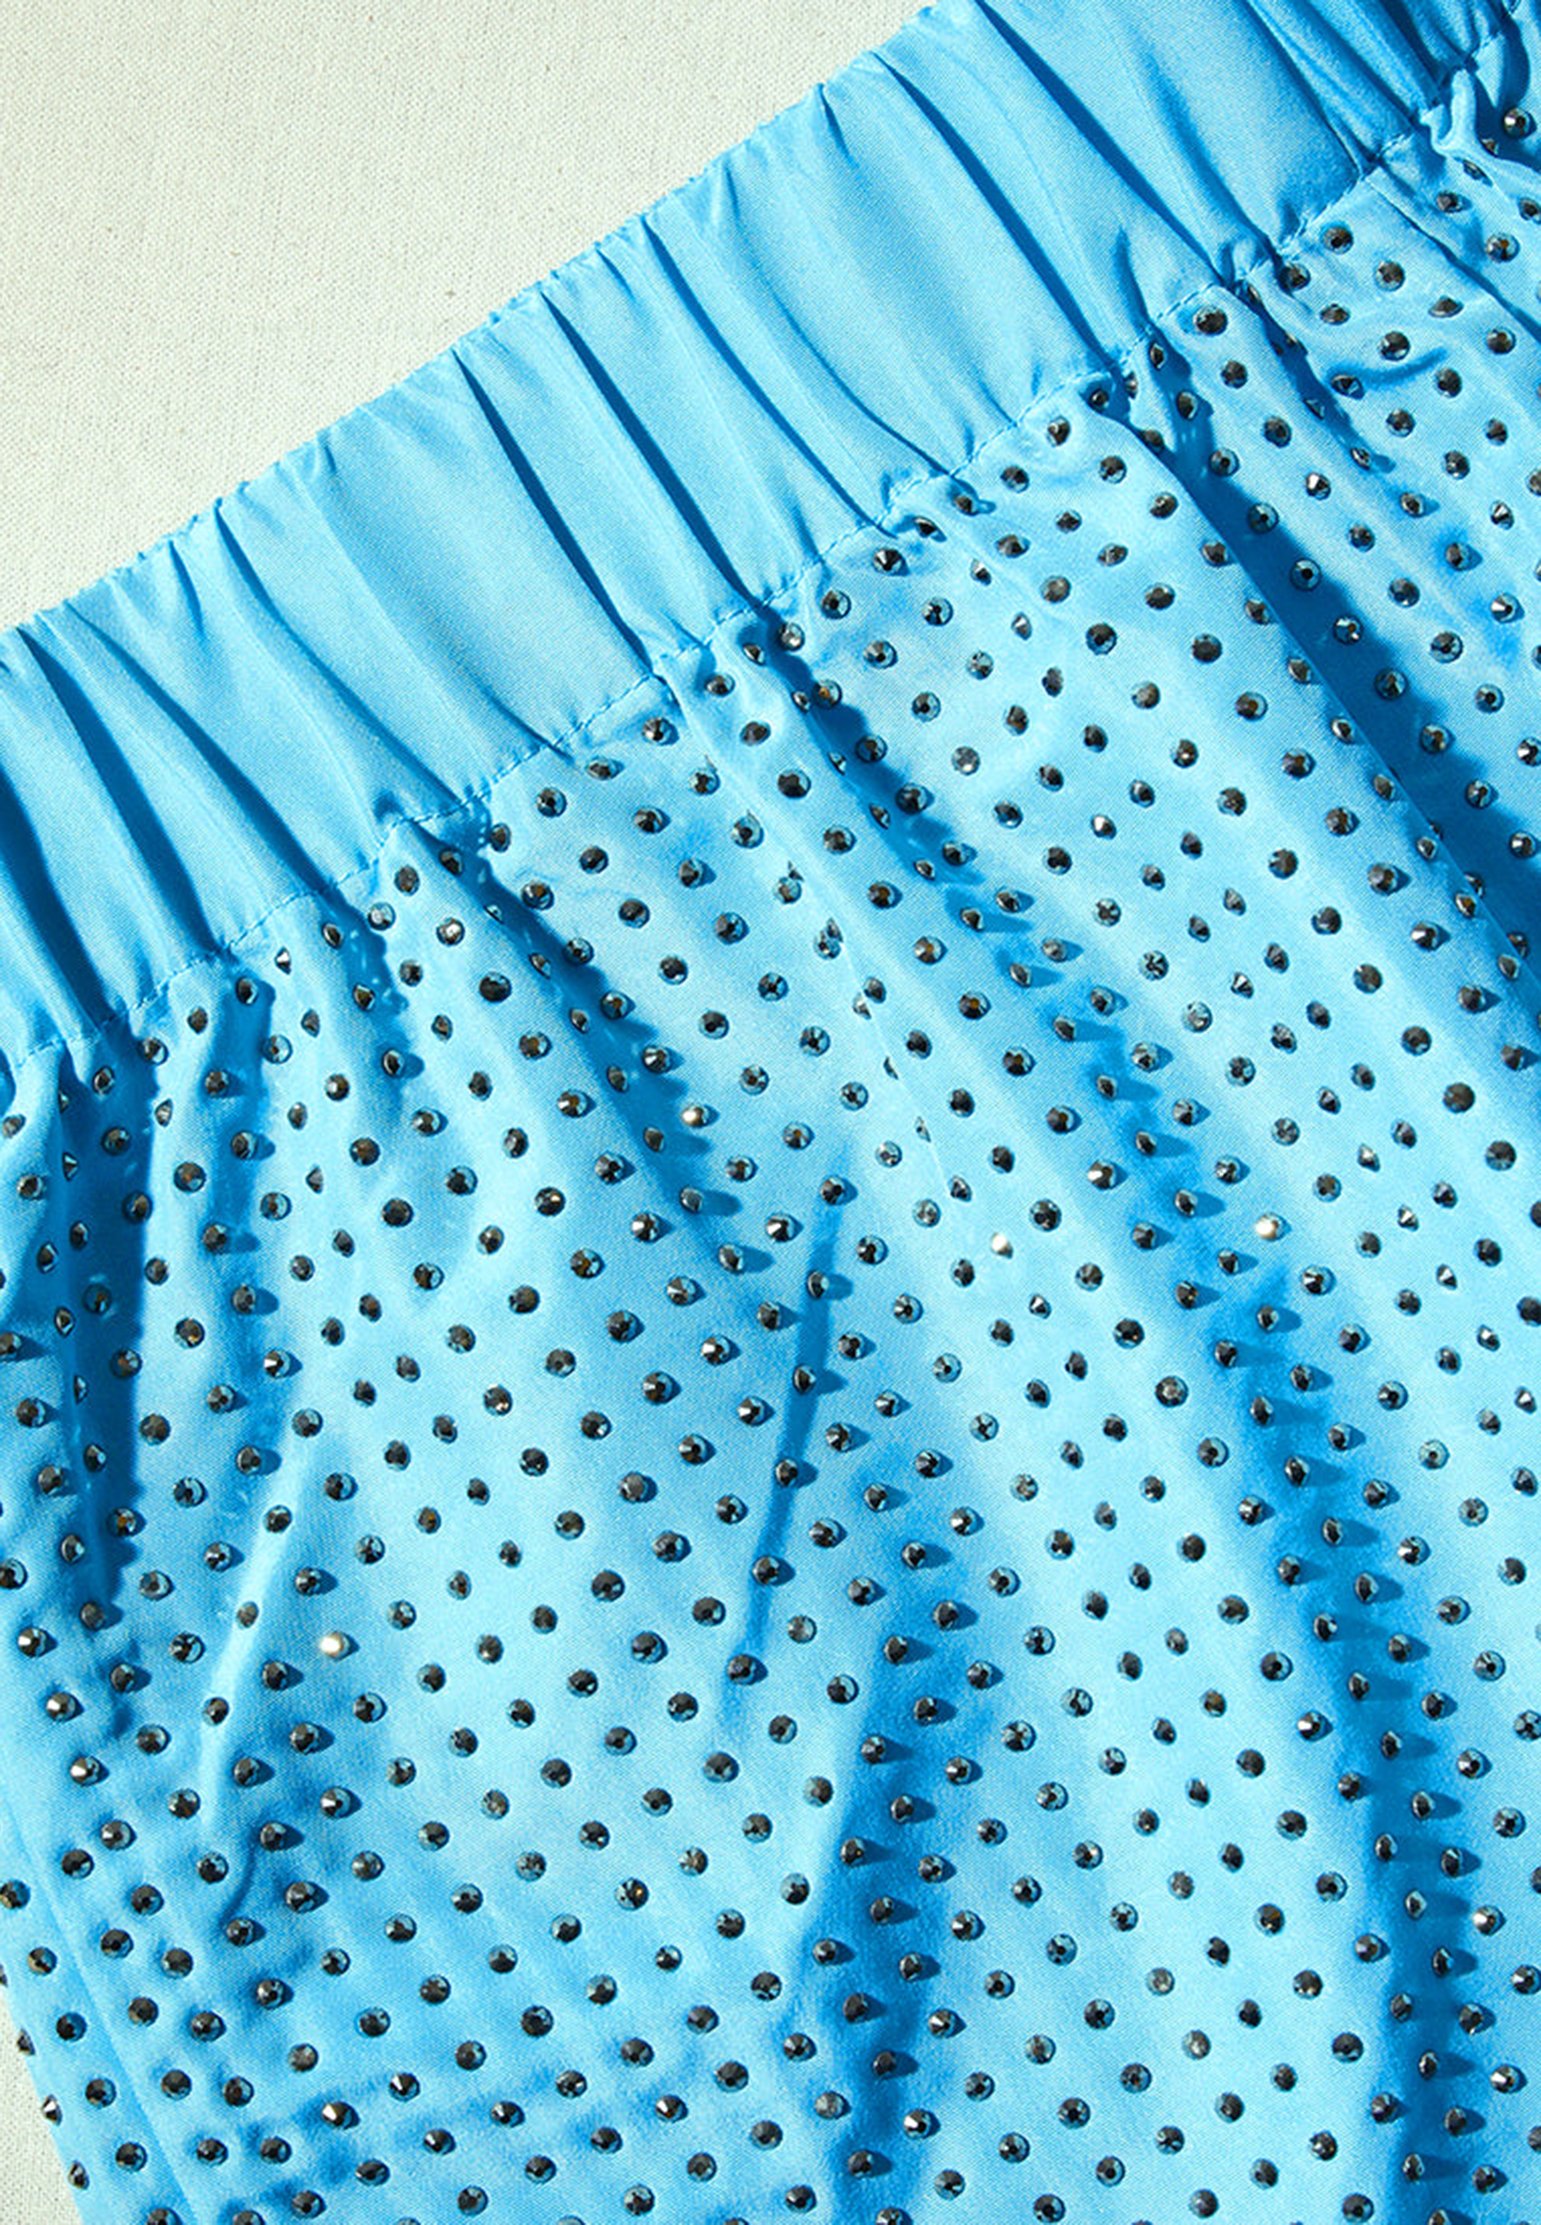 Shorts SELF-PORTRAIT Color: blue (Code: 2248) in online store Allure